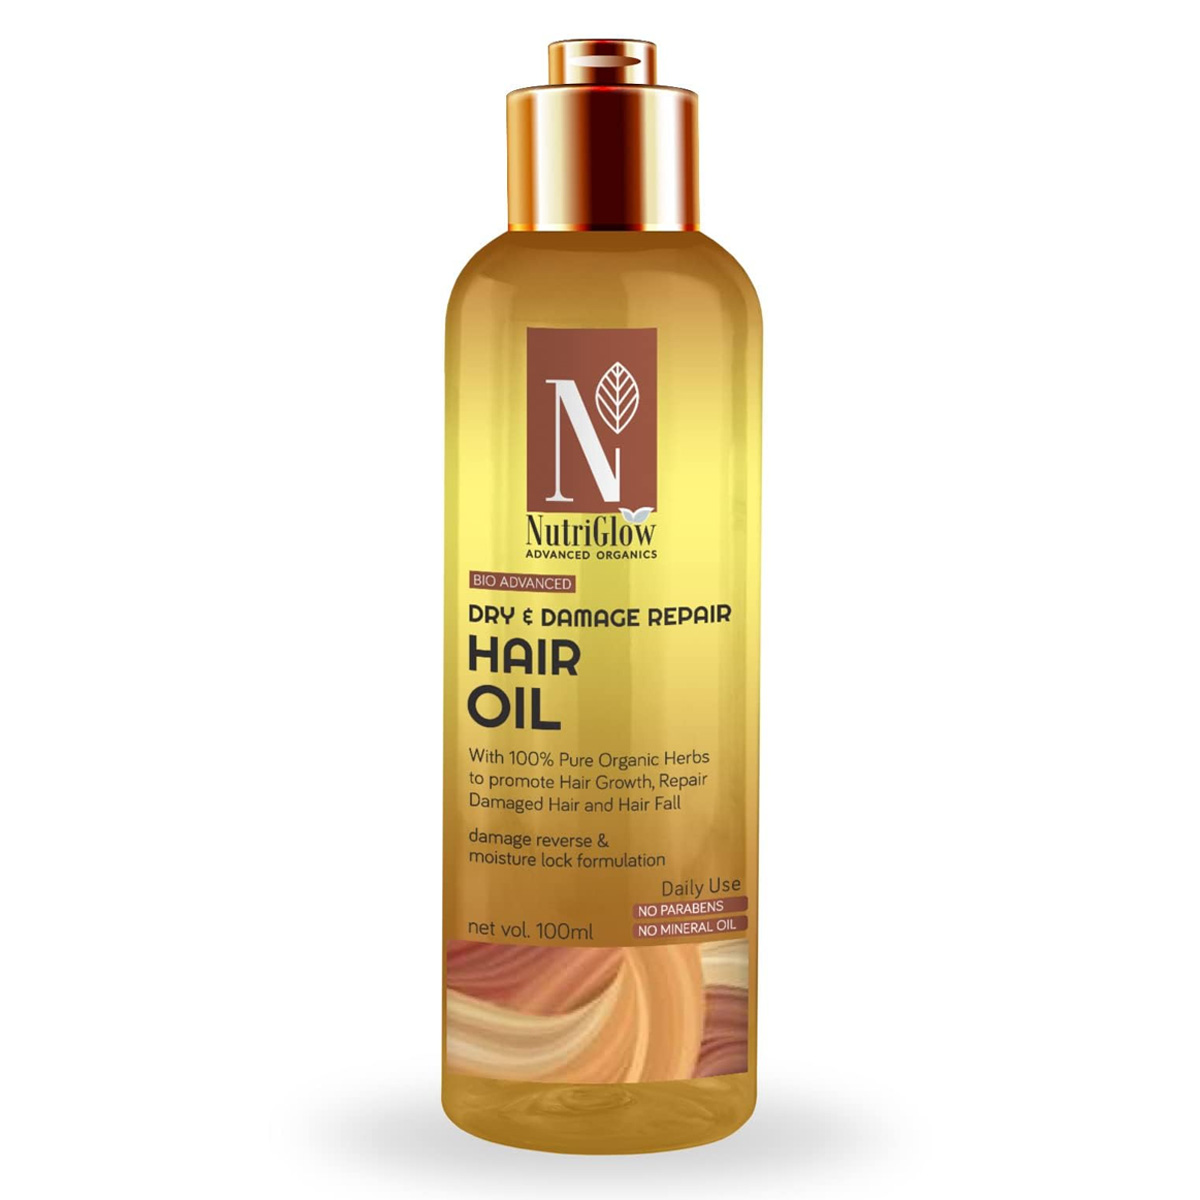 Nutriglow Advanced Organics Bio Advanced Dry And Damage Repair Hair Oil, 100ml